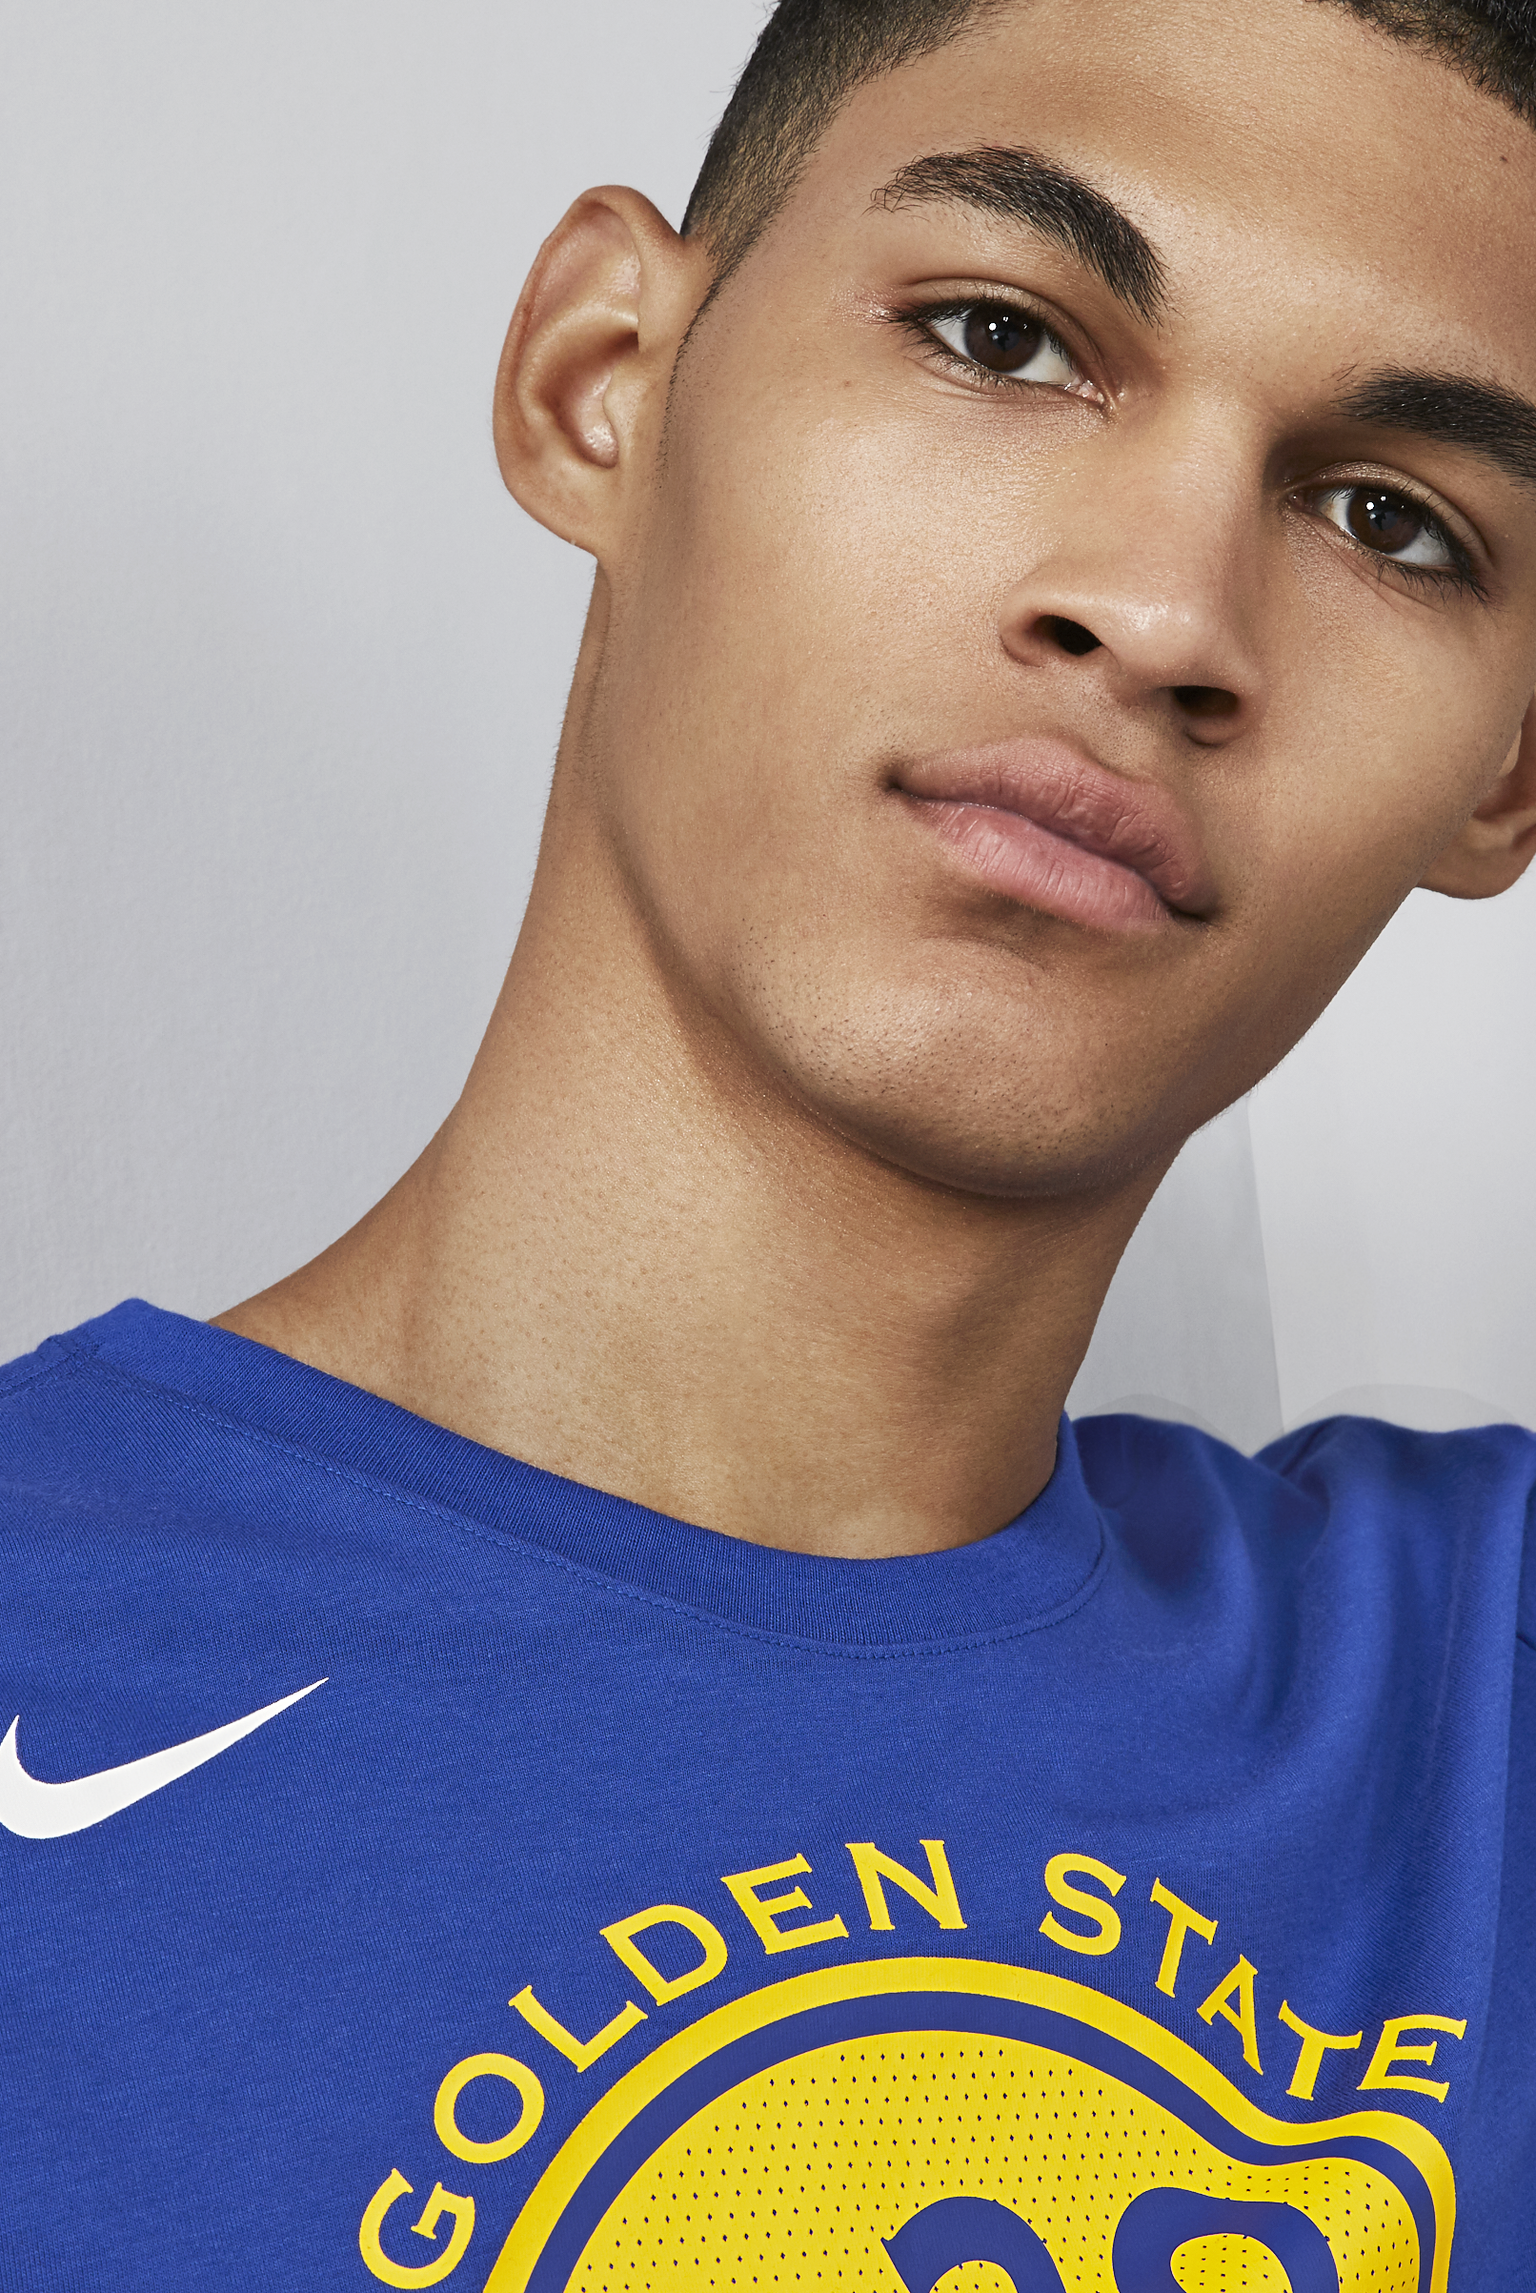 Stephen Curry Golden State Warriors Nike Dri-FIT Men's NBA T-Shirt